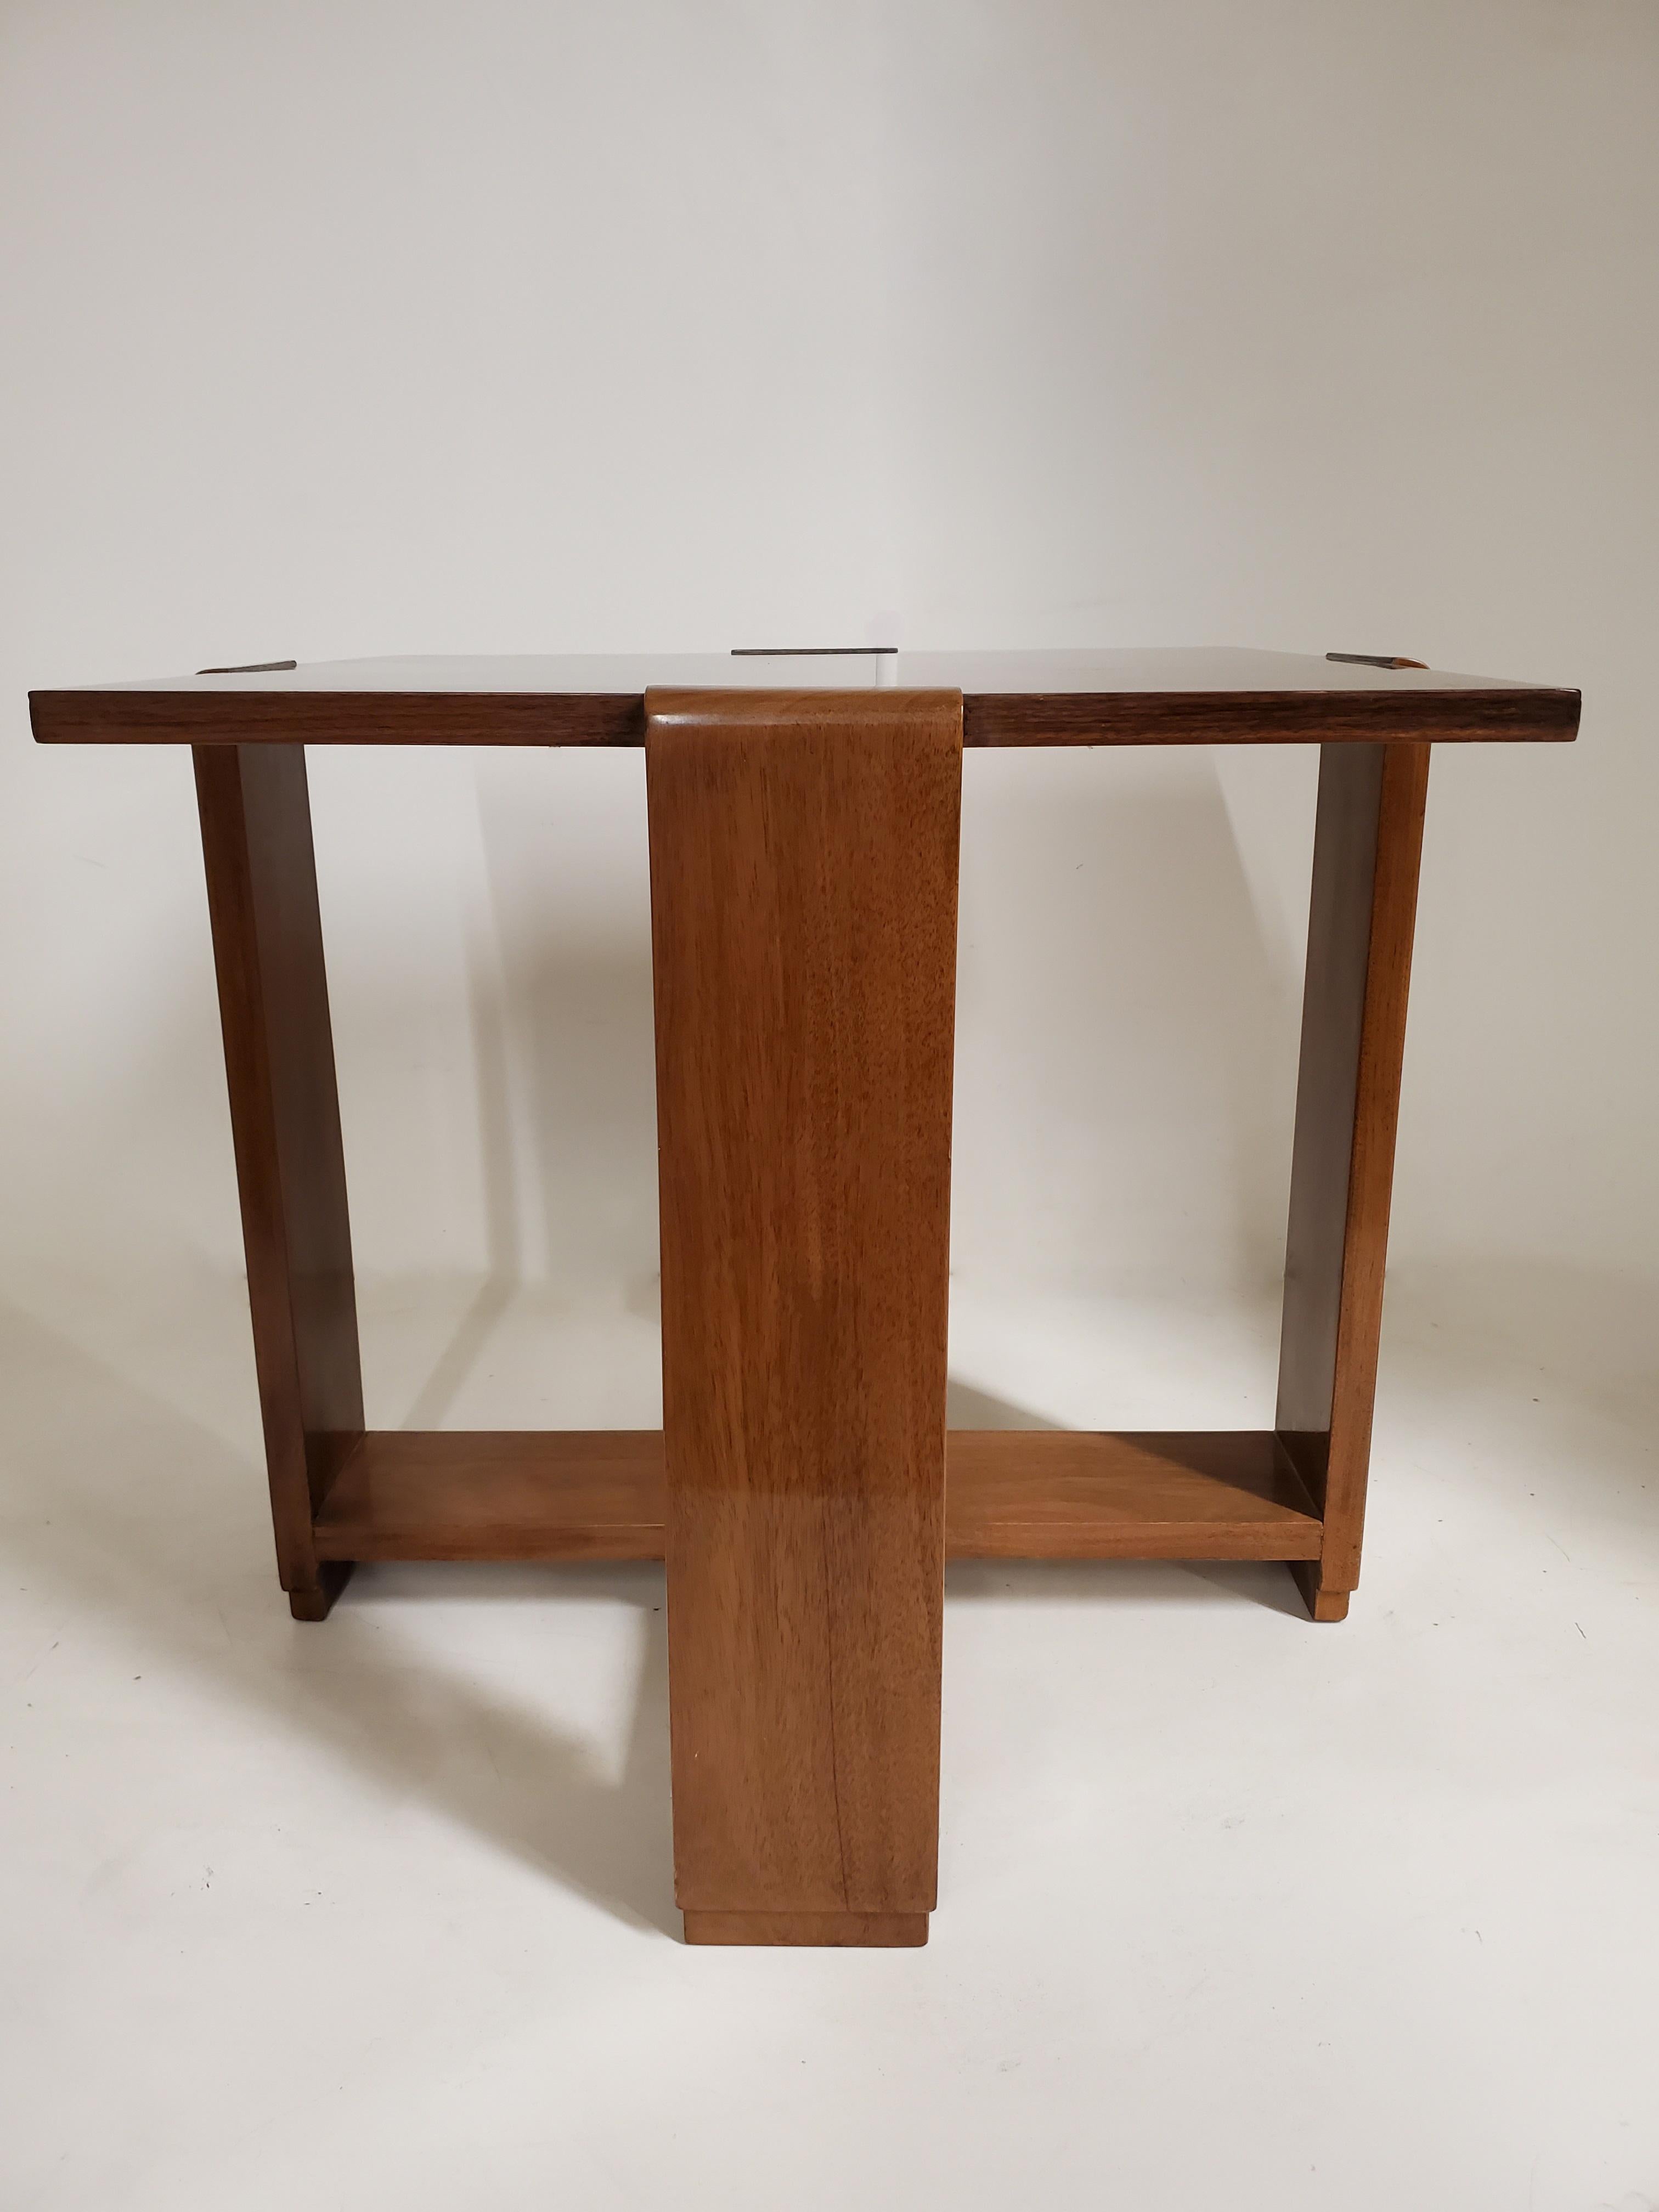 Original French Art Deco Macassar Ebony Square Table, Michel Roux-Spitz For Sale 13